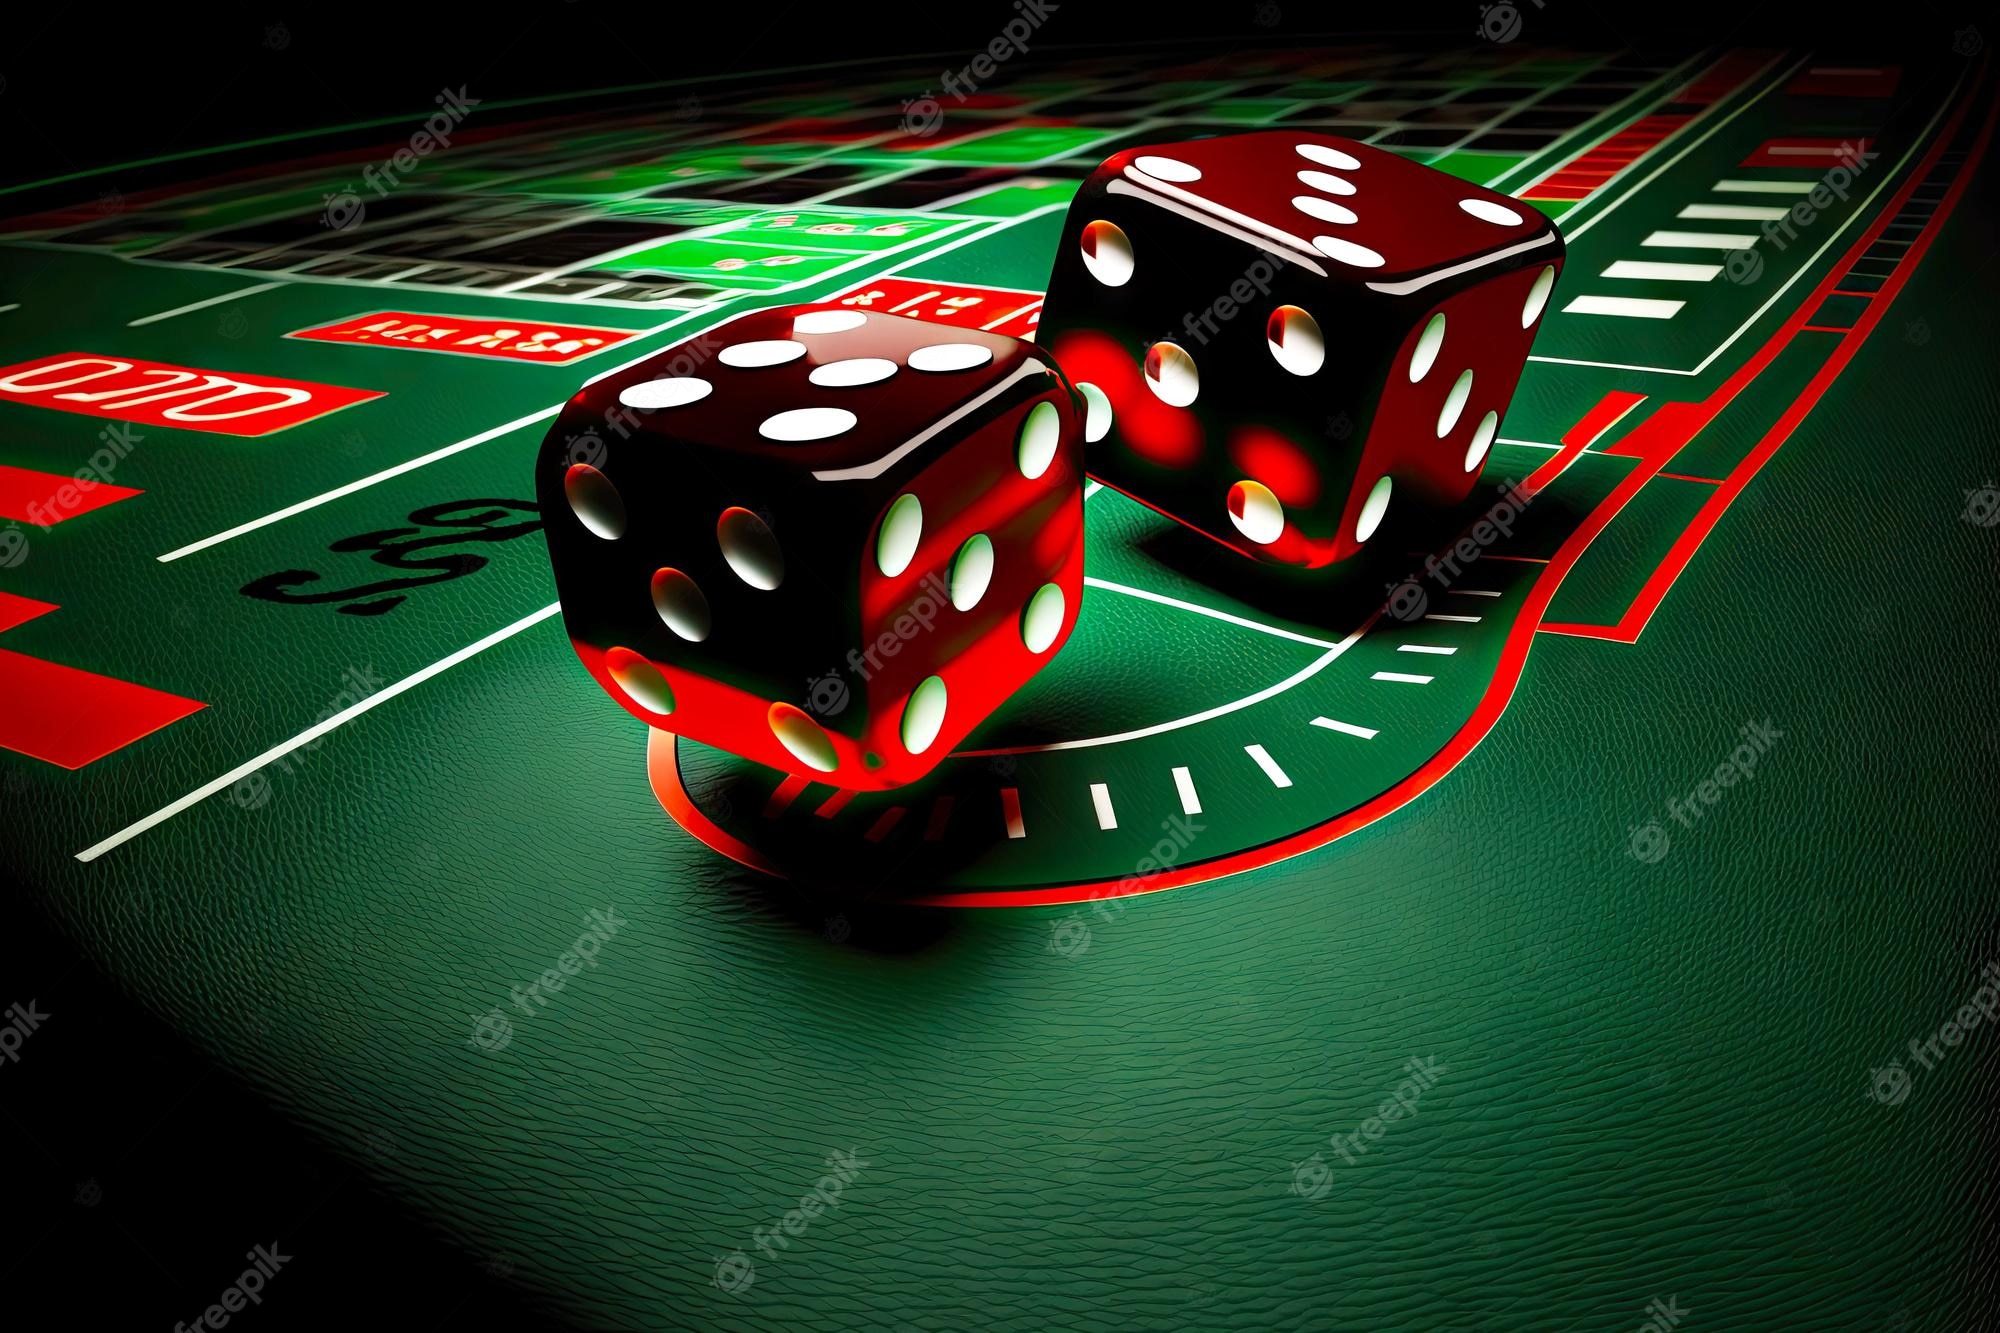 Premium Photo. Craps table with dice in casino elements background